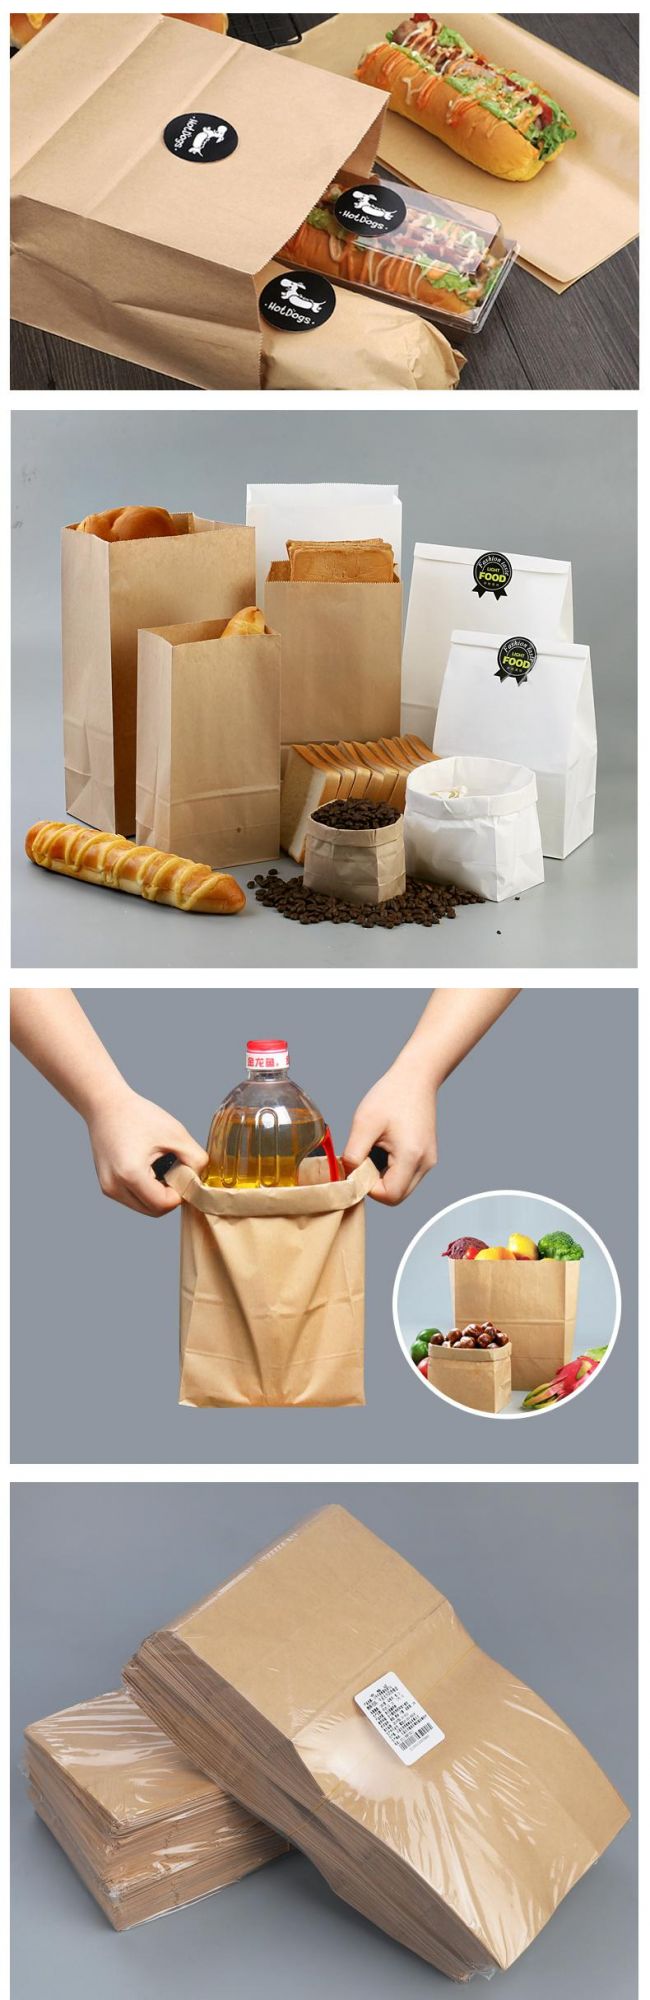 Custom for Food Grade Kraft Paper Bag Recycled Brown Paper Bag with Logo Printed Kraft Paper Bag